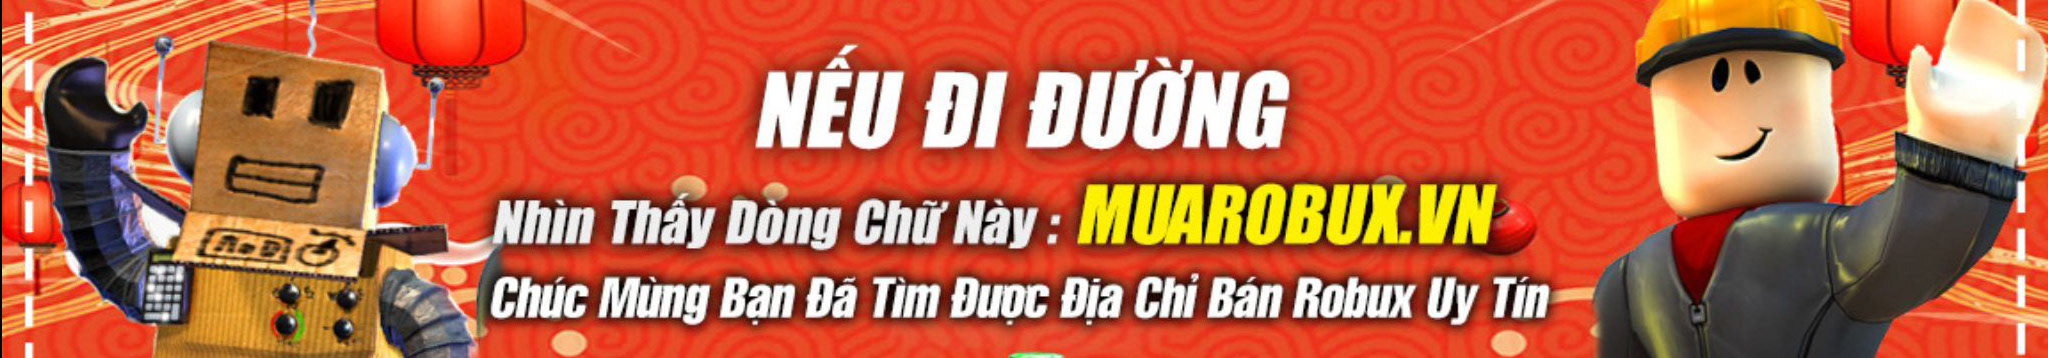 Mua Robux's profile banner